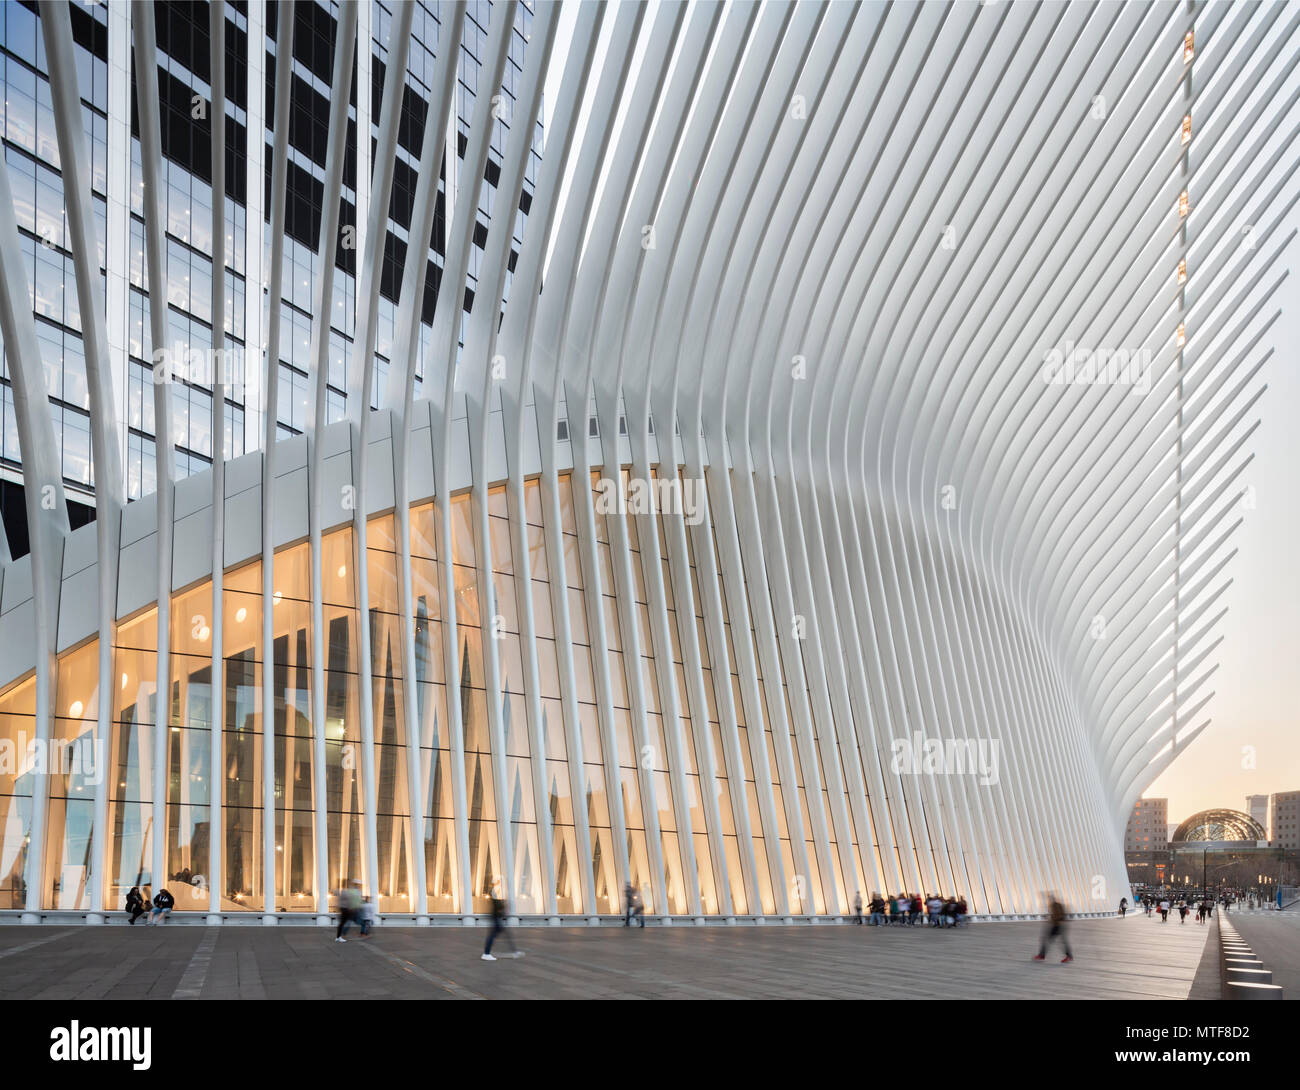 The Oculus World Trade Center Transportation Hub at Ground Zero in Lower Manhattan, NYC oculus new york Stock Photo